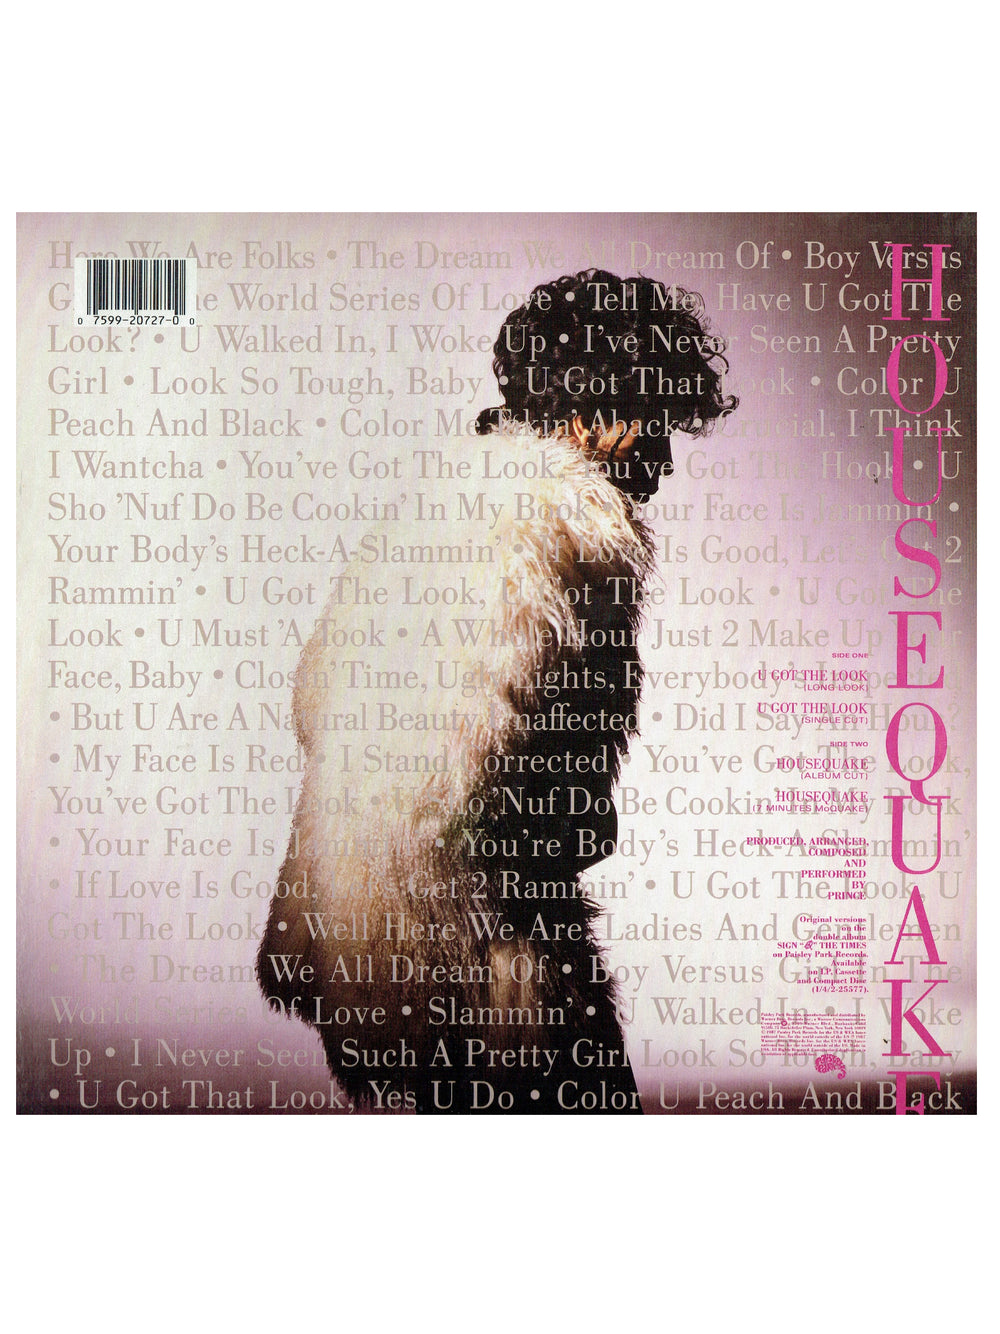 Prince – U Got The Look / Housequake 12 inch Maxi Single Vinyl USA Release